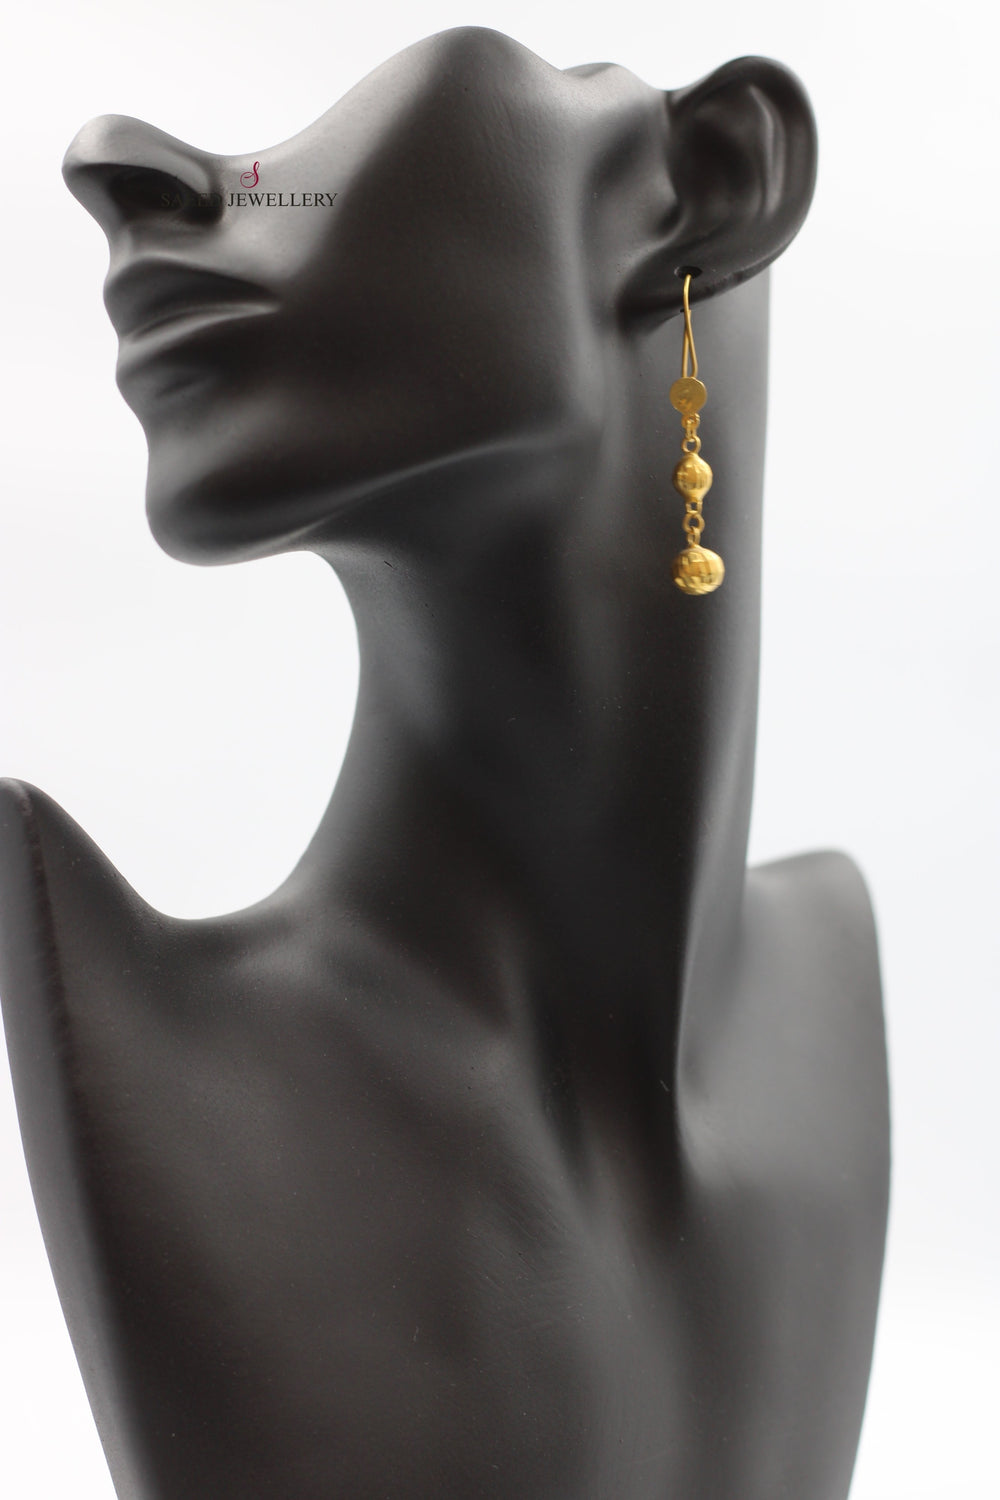 21K Bead Earrings Made of 21K Yellow Gold by Saeed Jewelry-حلق-طابات